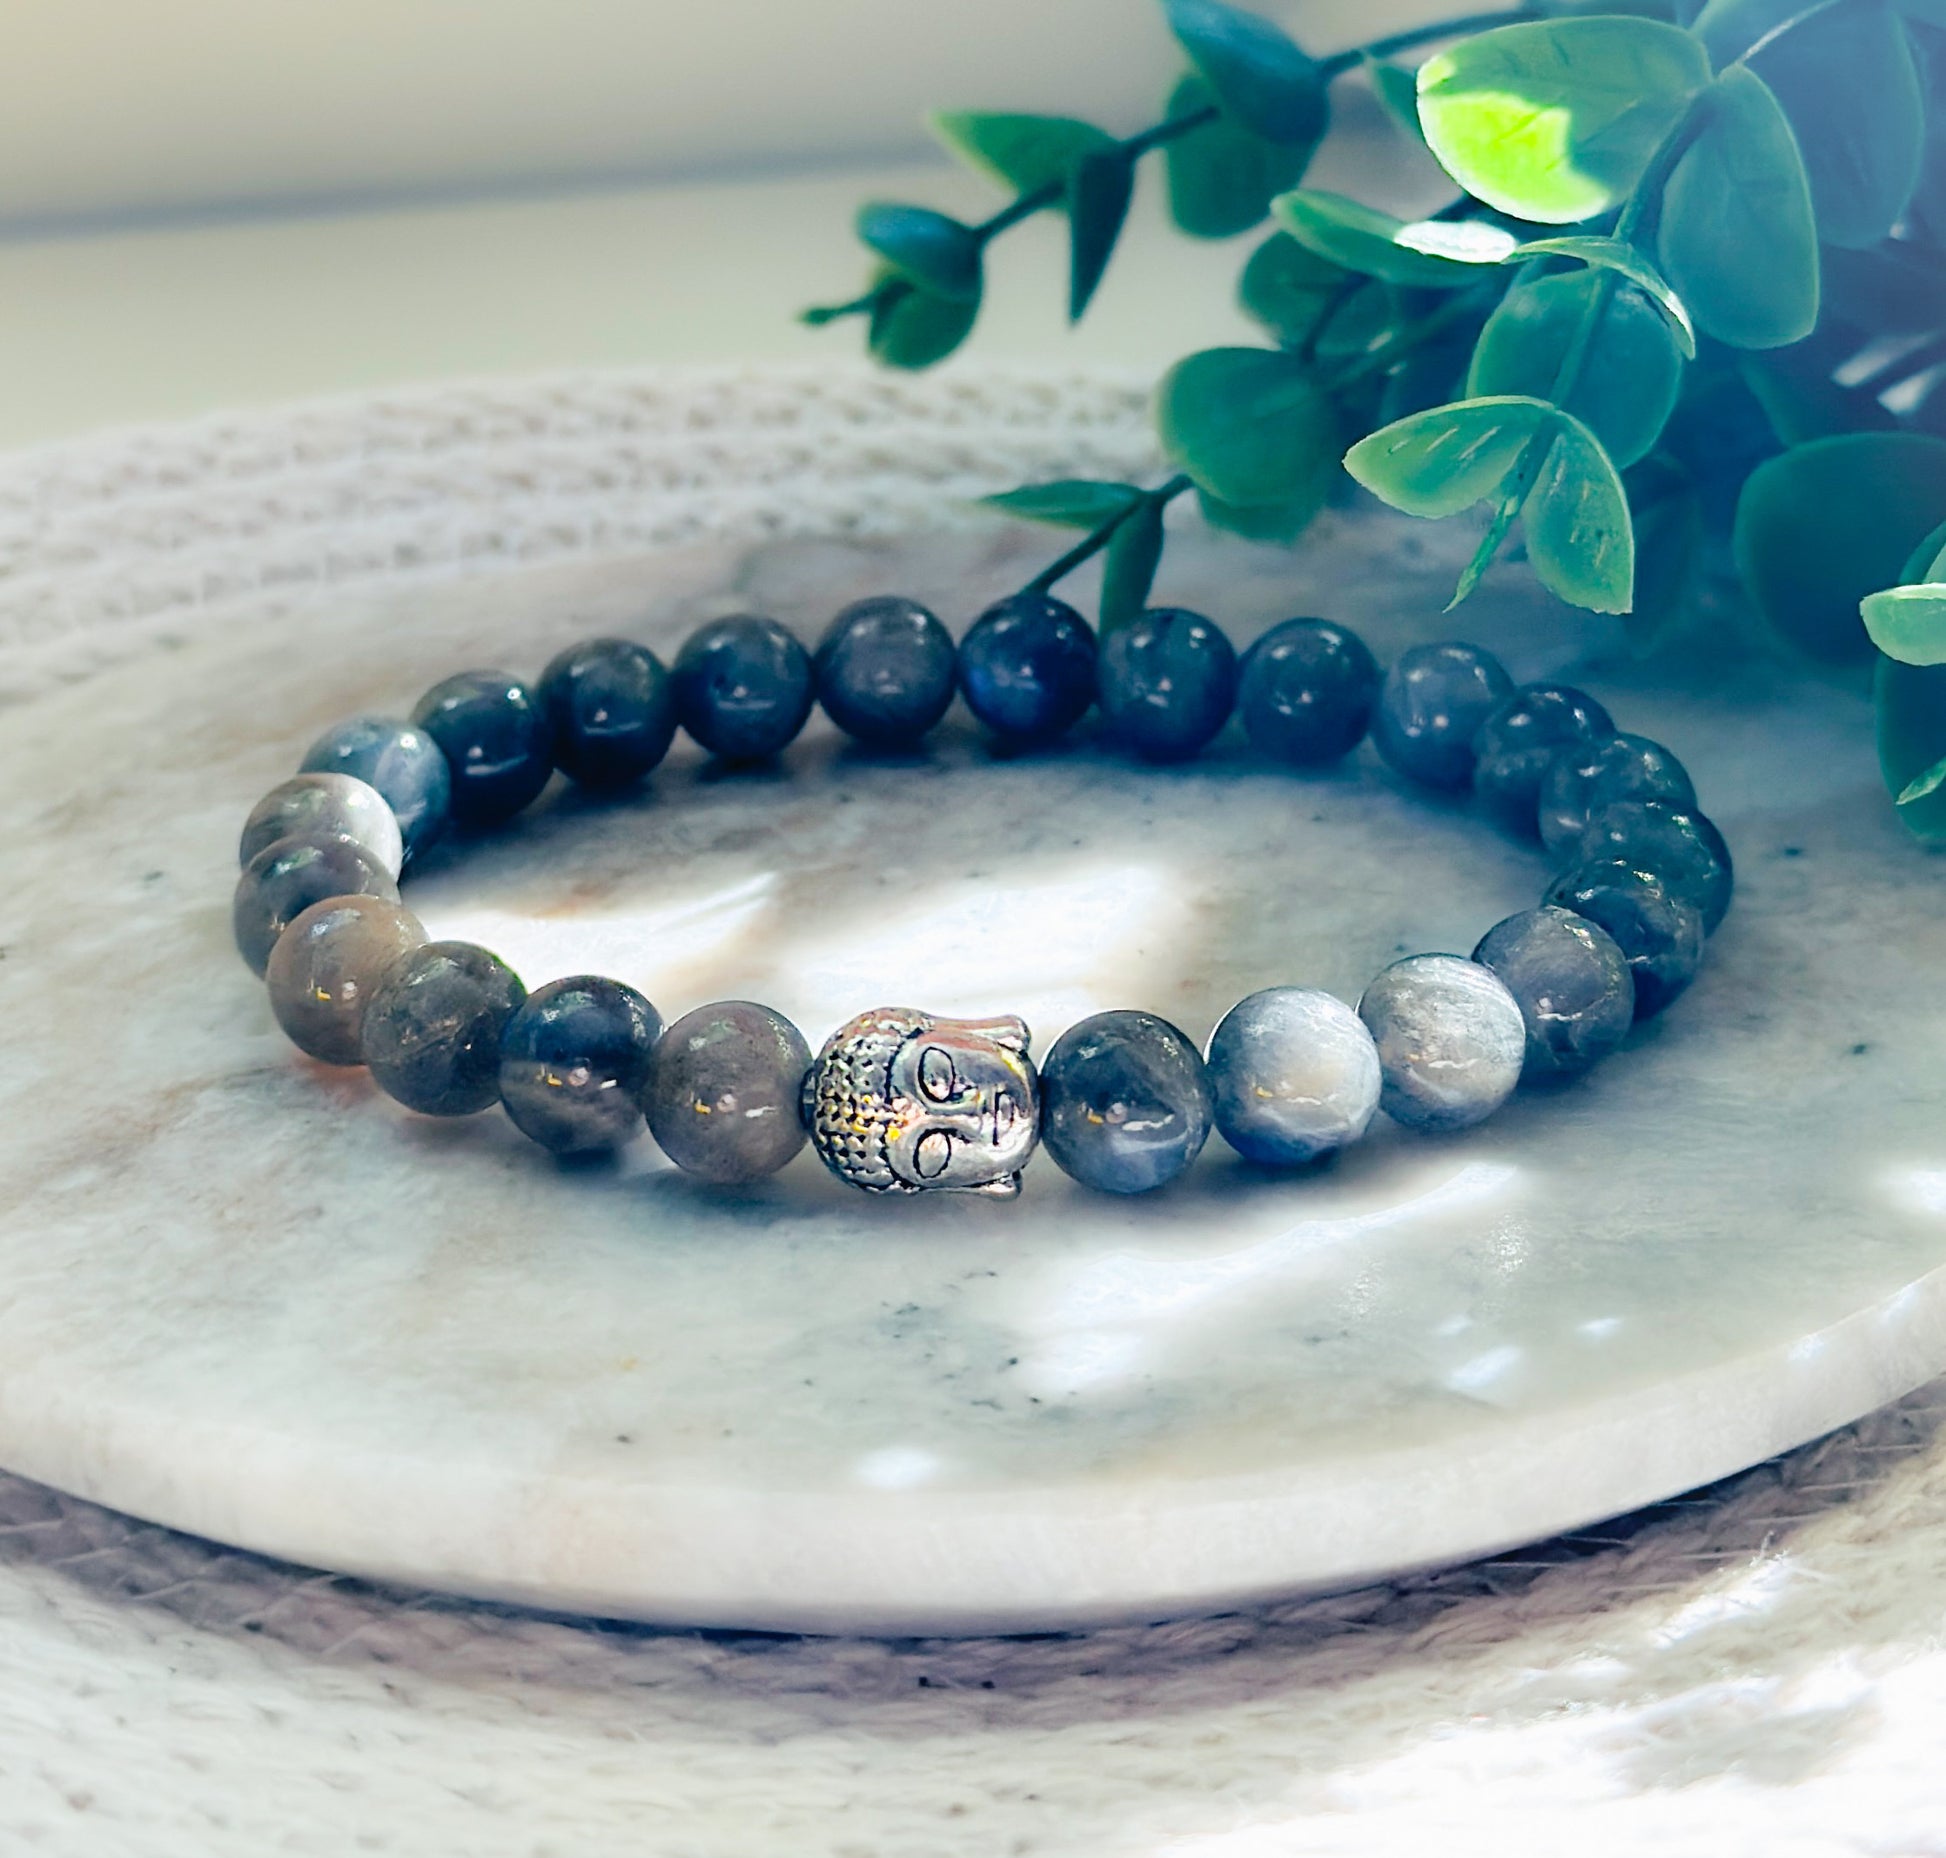 Labradorite gemstone and a Silver Buddha bead